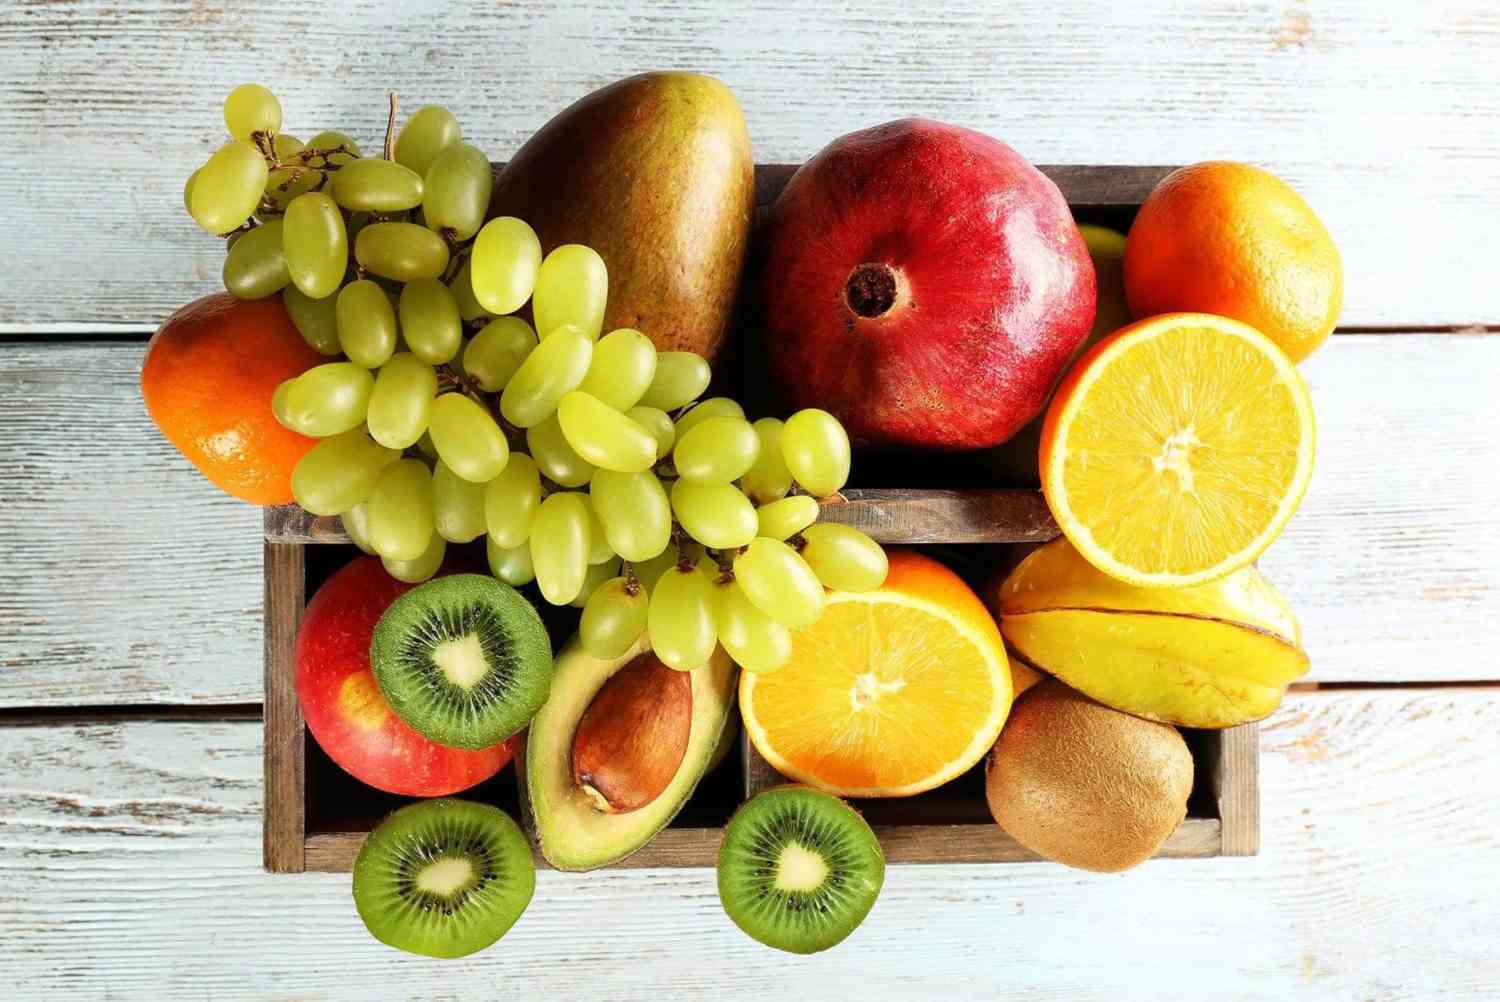 Servicio de fruta fresca para empresas